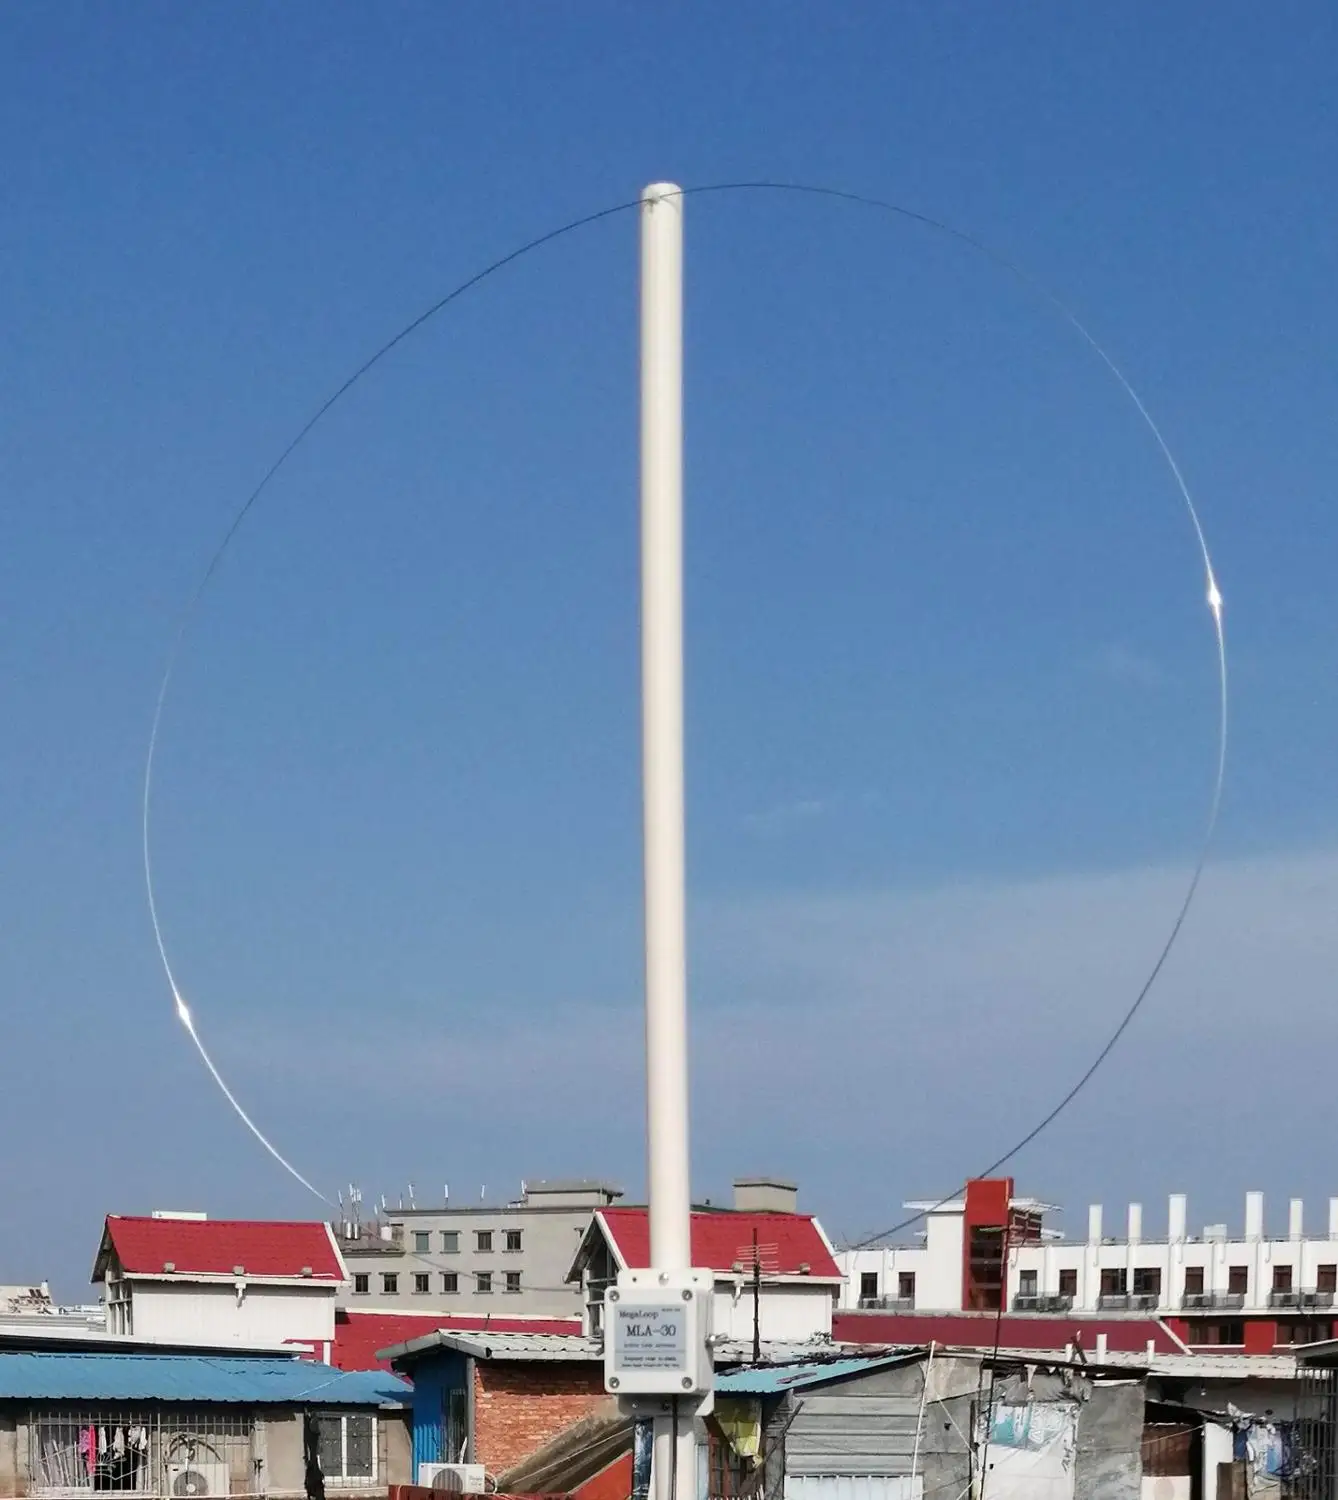 Последняя версия MLA-30 Рамочная антенна активная приемная антенна 100 кГц-30 МГц для коротковолновое радио